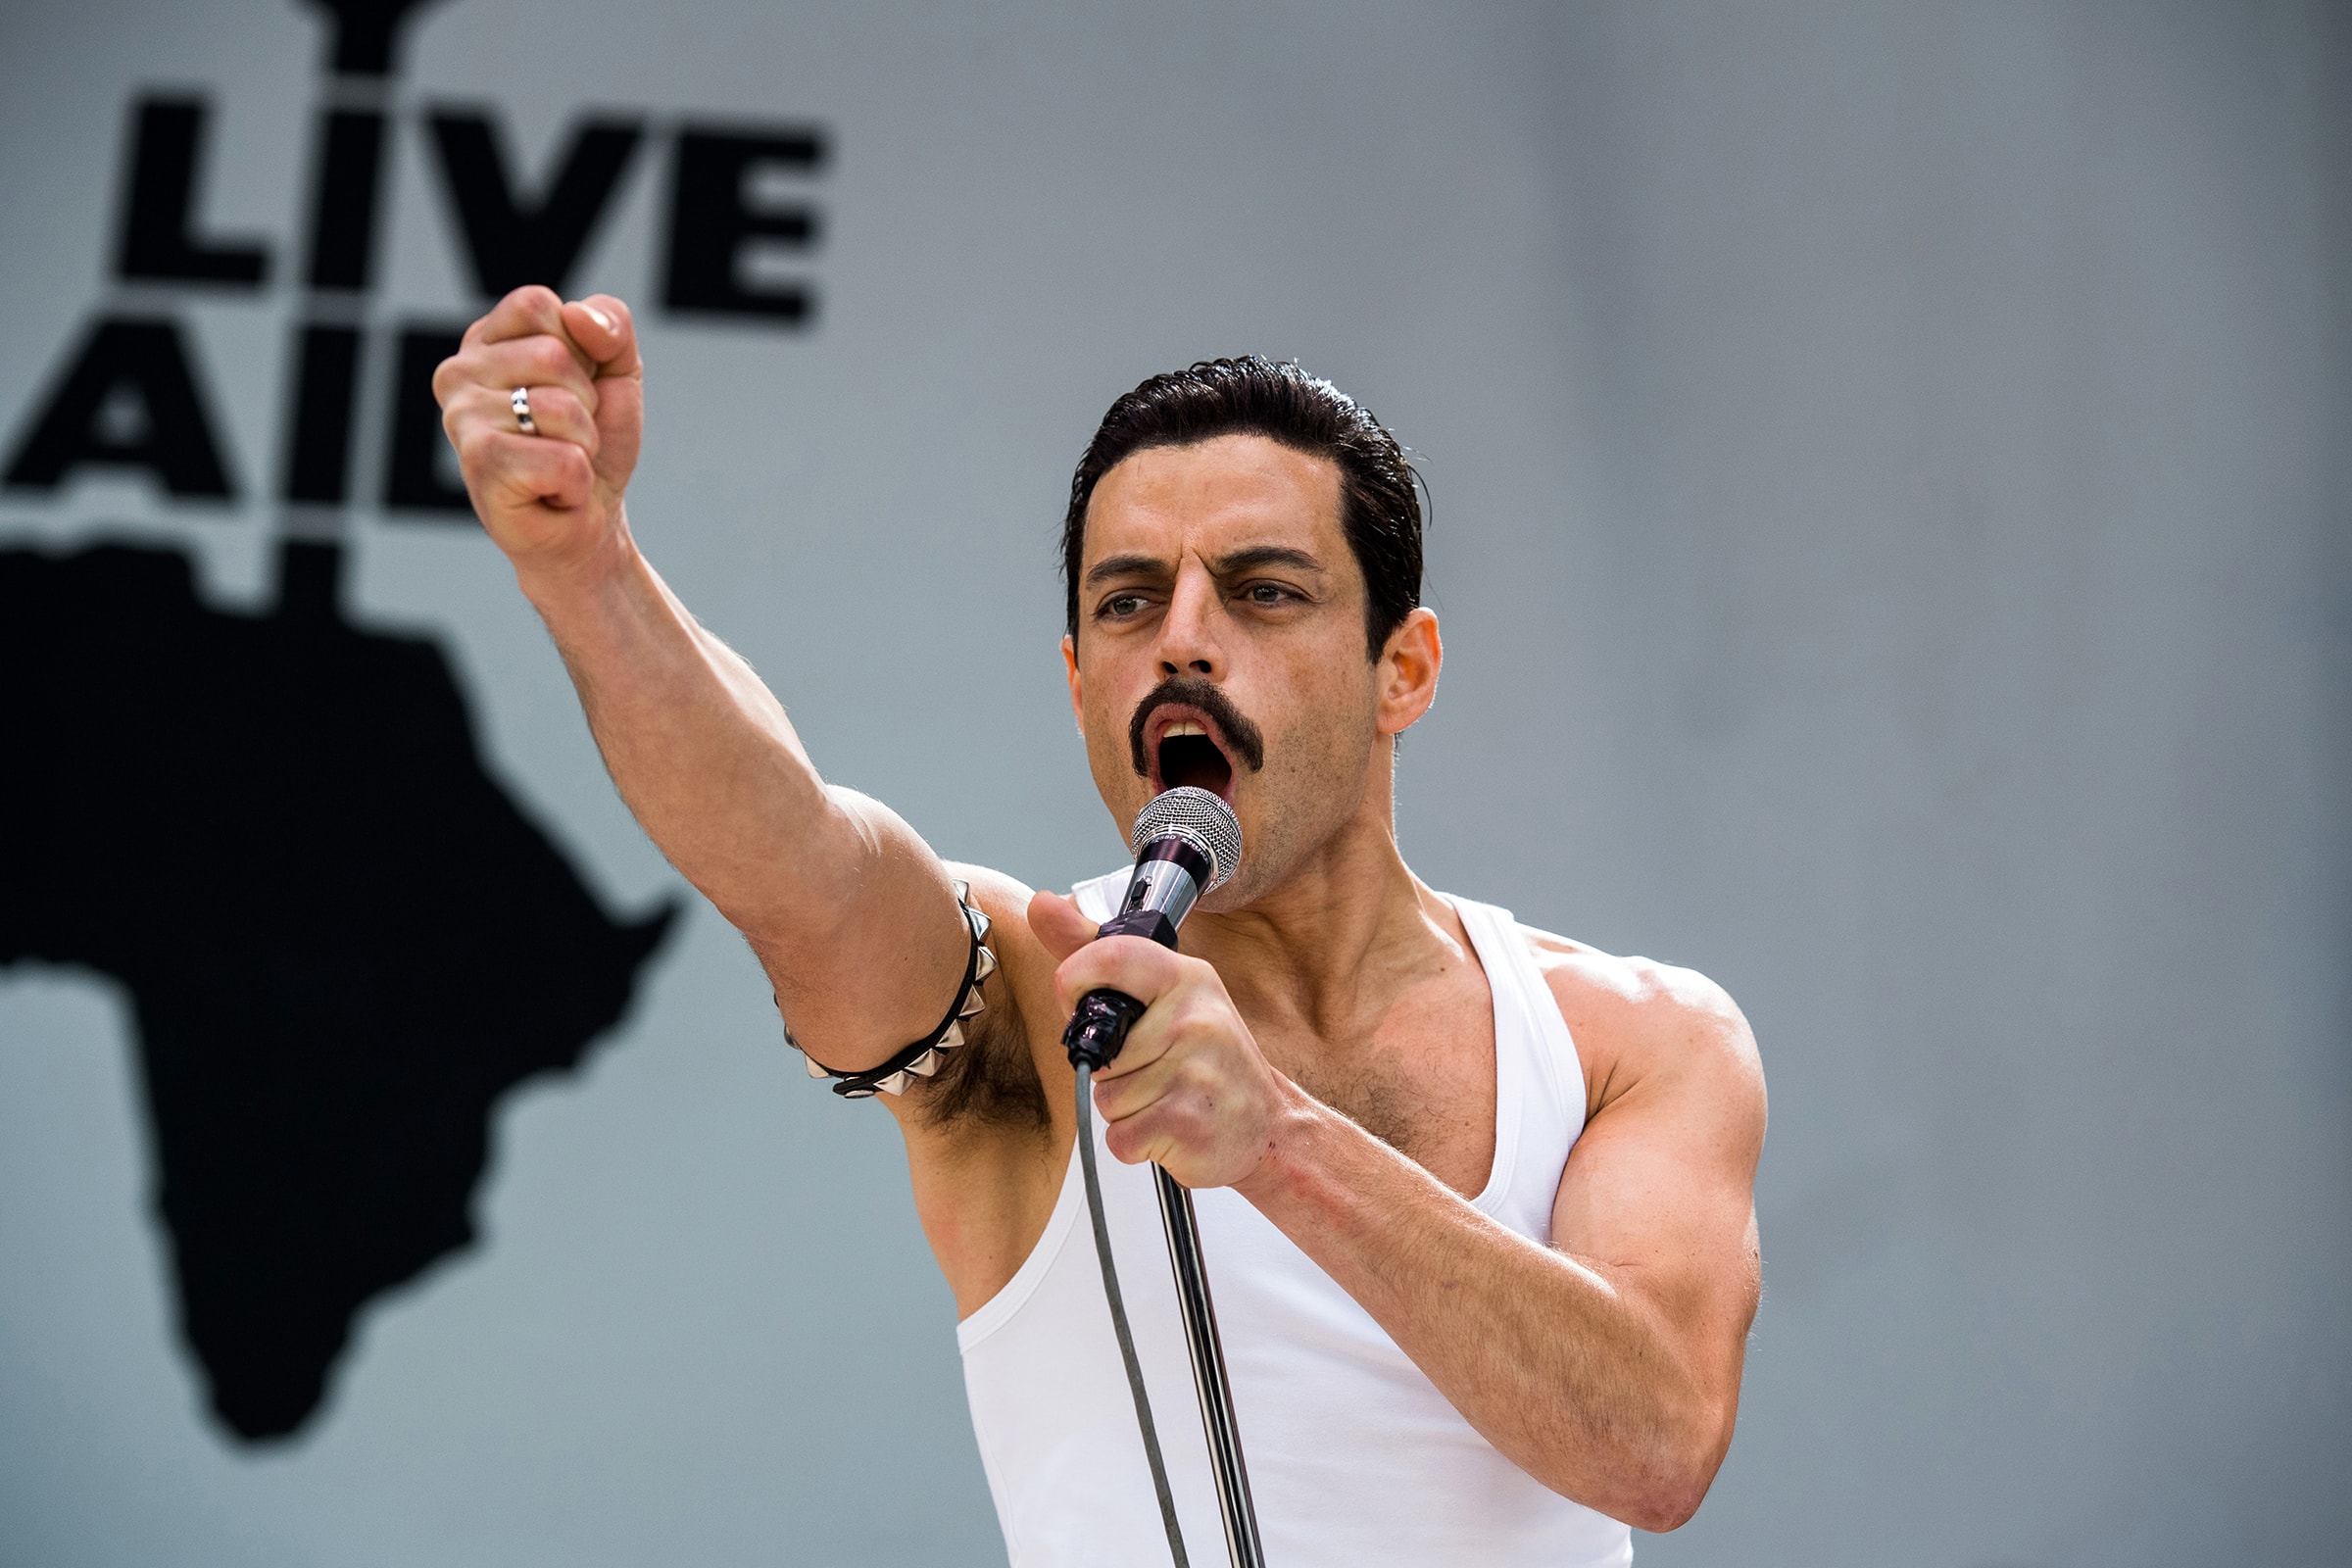 Nädala parim film: ostke Rami Malekiga film “Bohemian Rhapsody” 9,90 R $ eest!